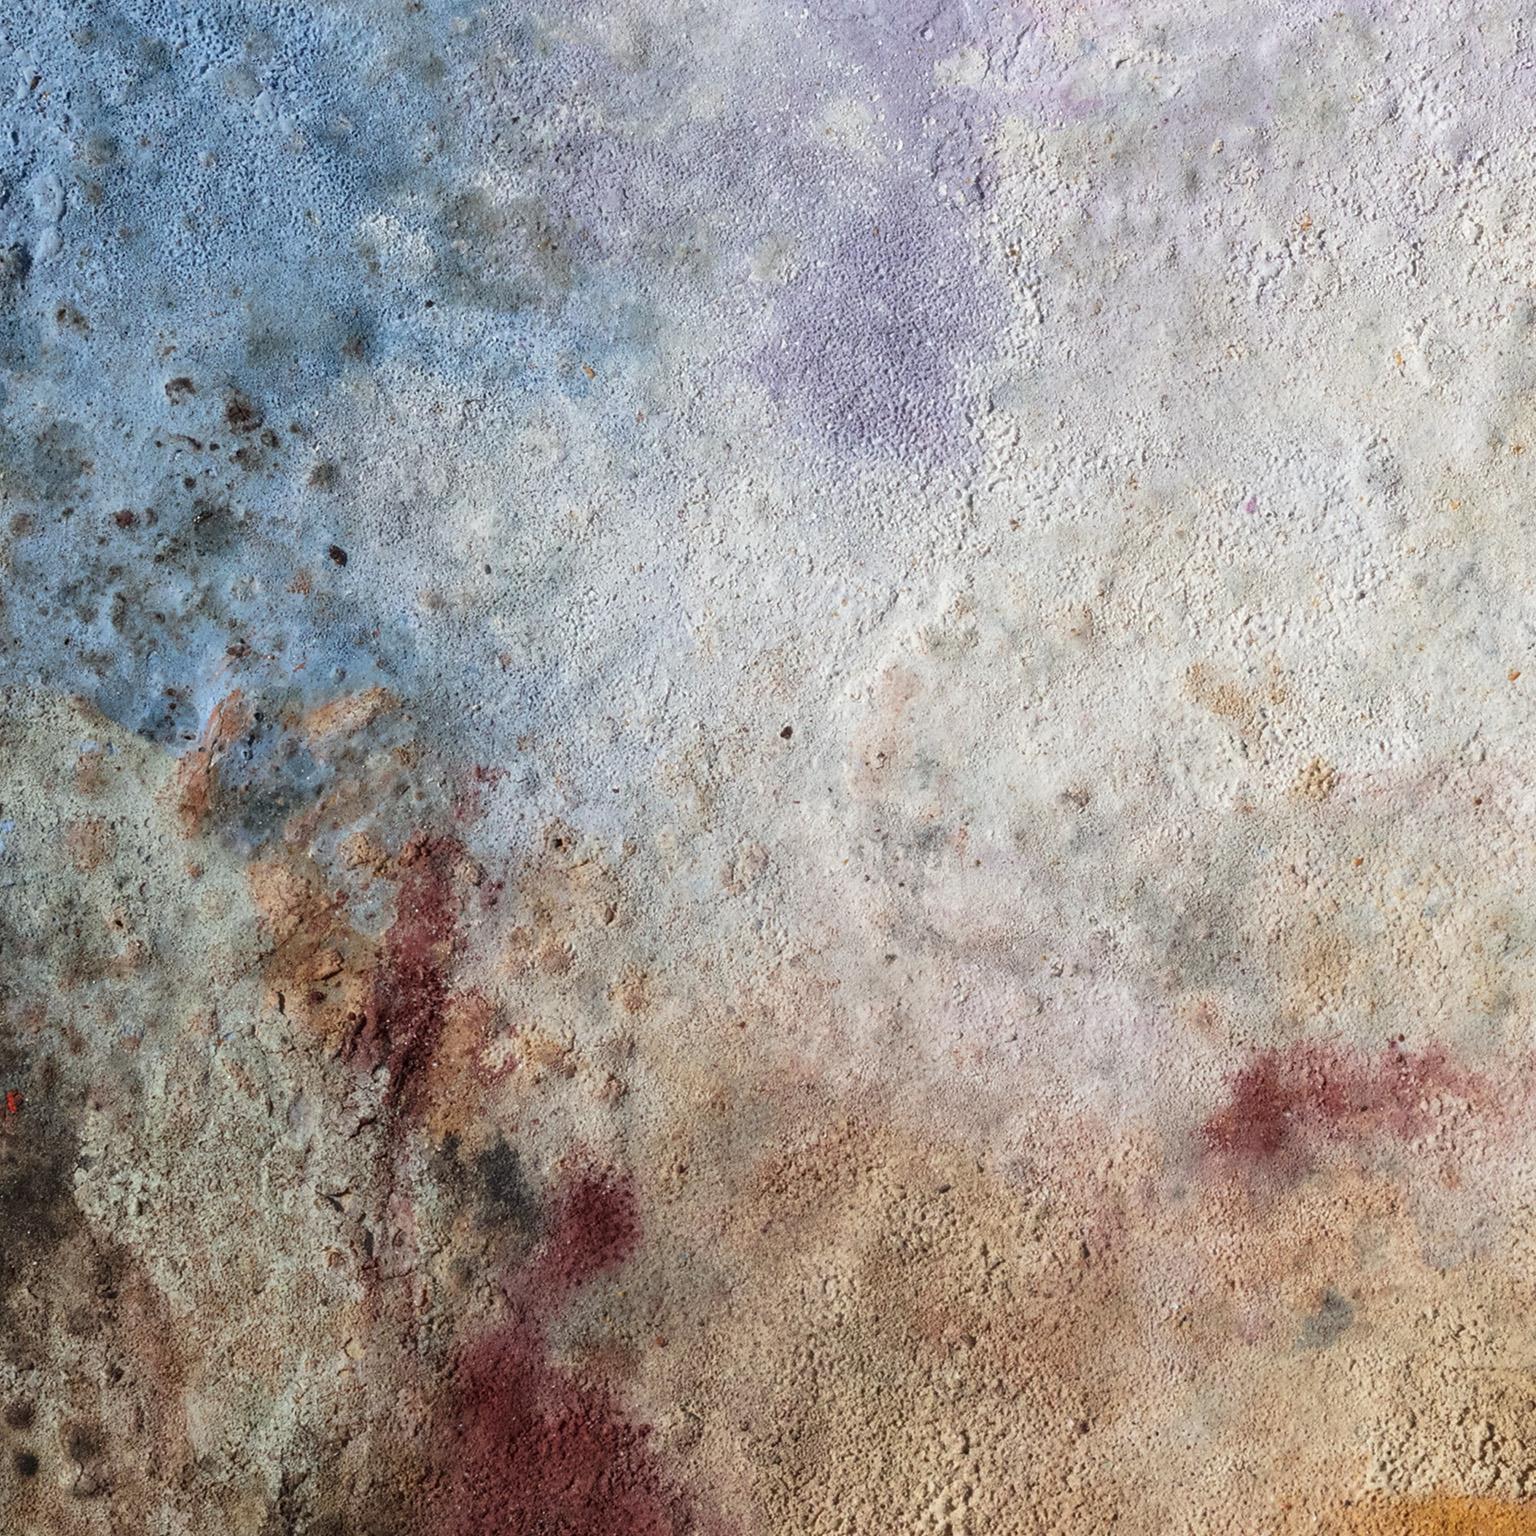 Terra Bruciata (Scorched Earth) #57 - Small Purple and Blue Abstract Landscape - Painting by Orazio De Gennaro